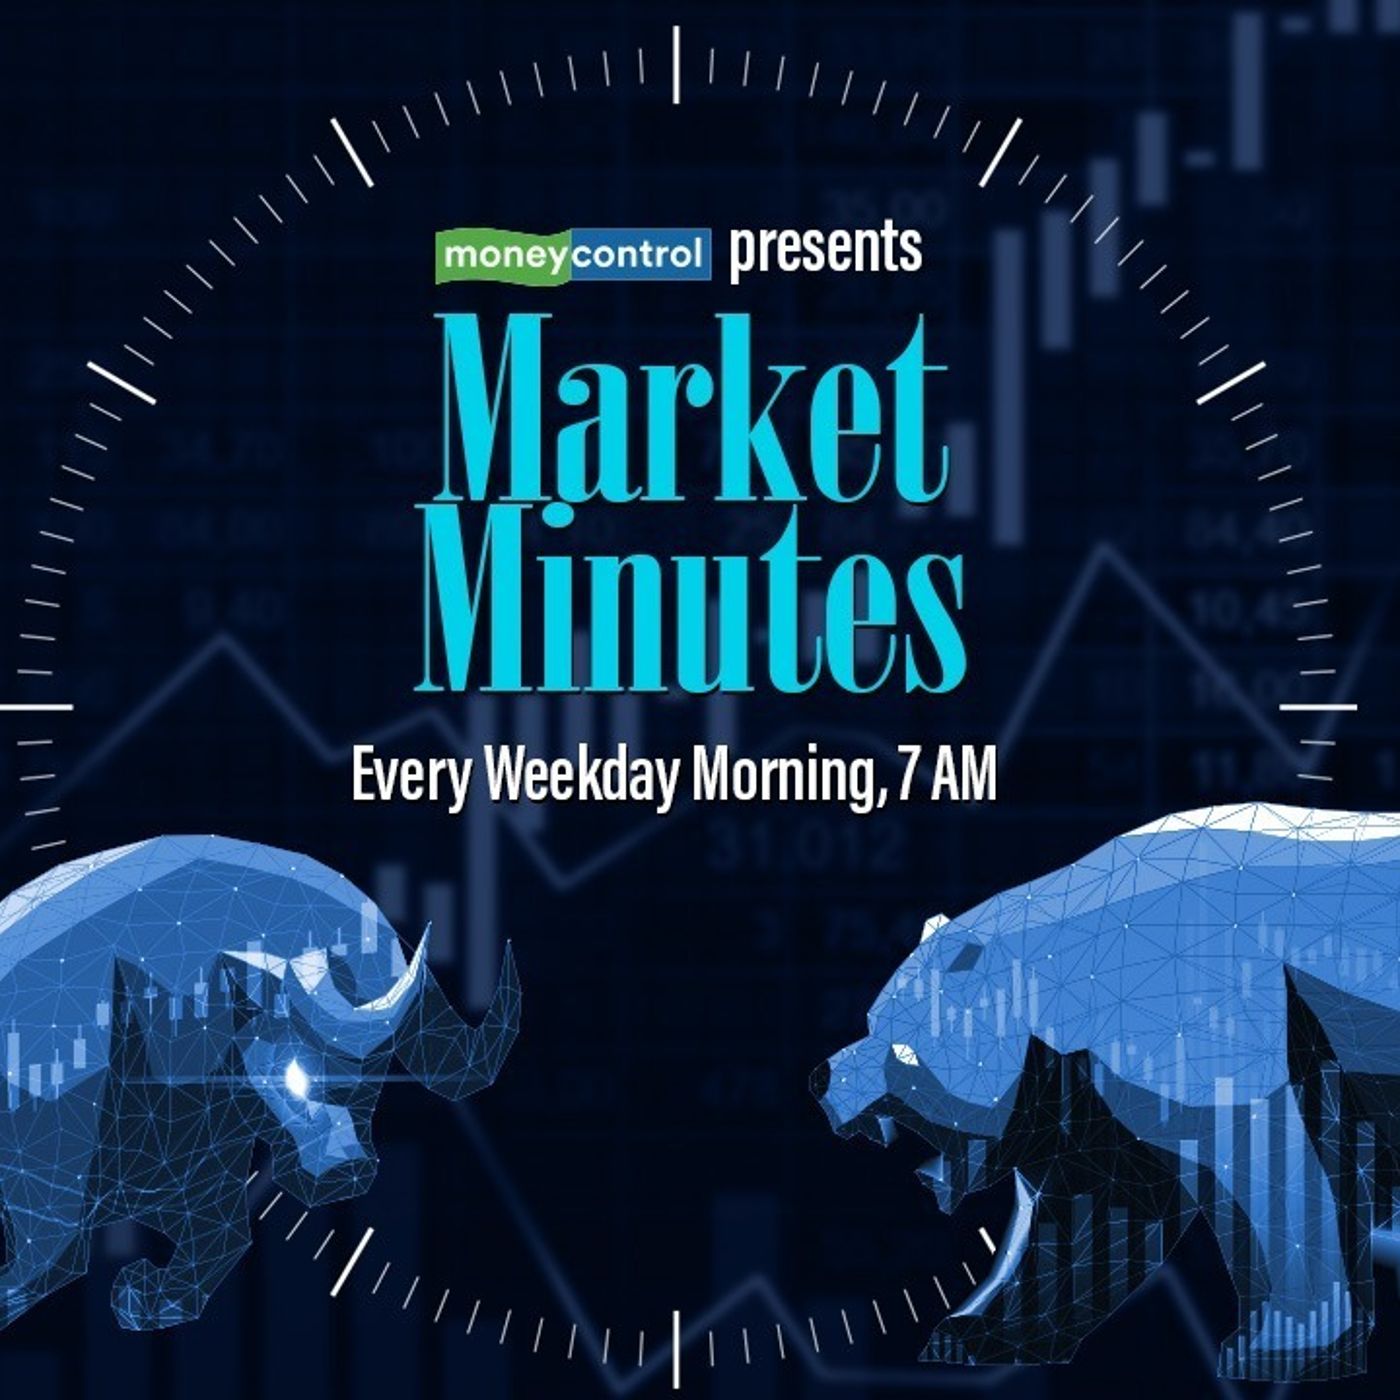 4232: ICICI Bank, HCL Tech, Maruti Suzuki in focus; Treasury yields, Asian markets, dollar clock gains | Market Minutes